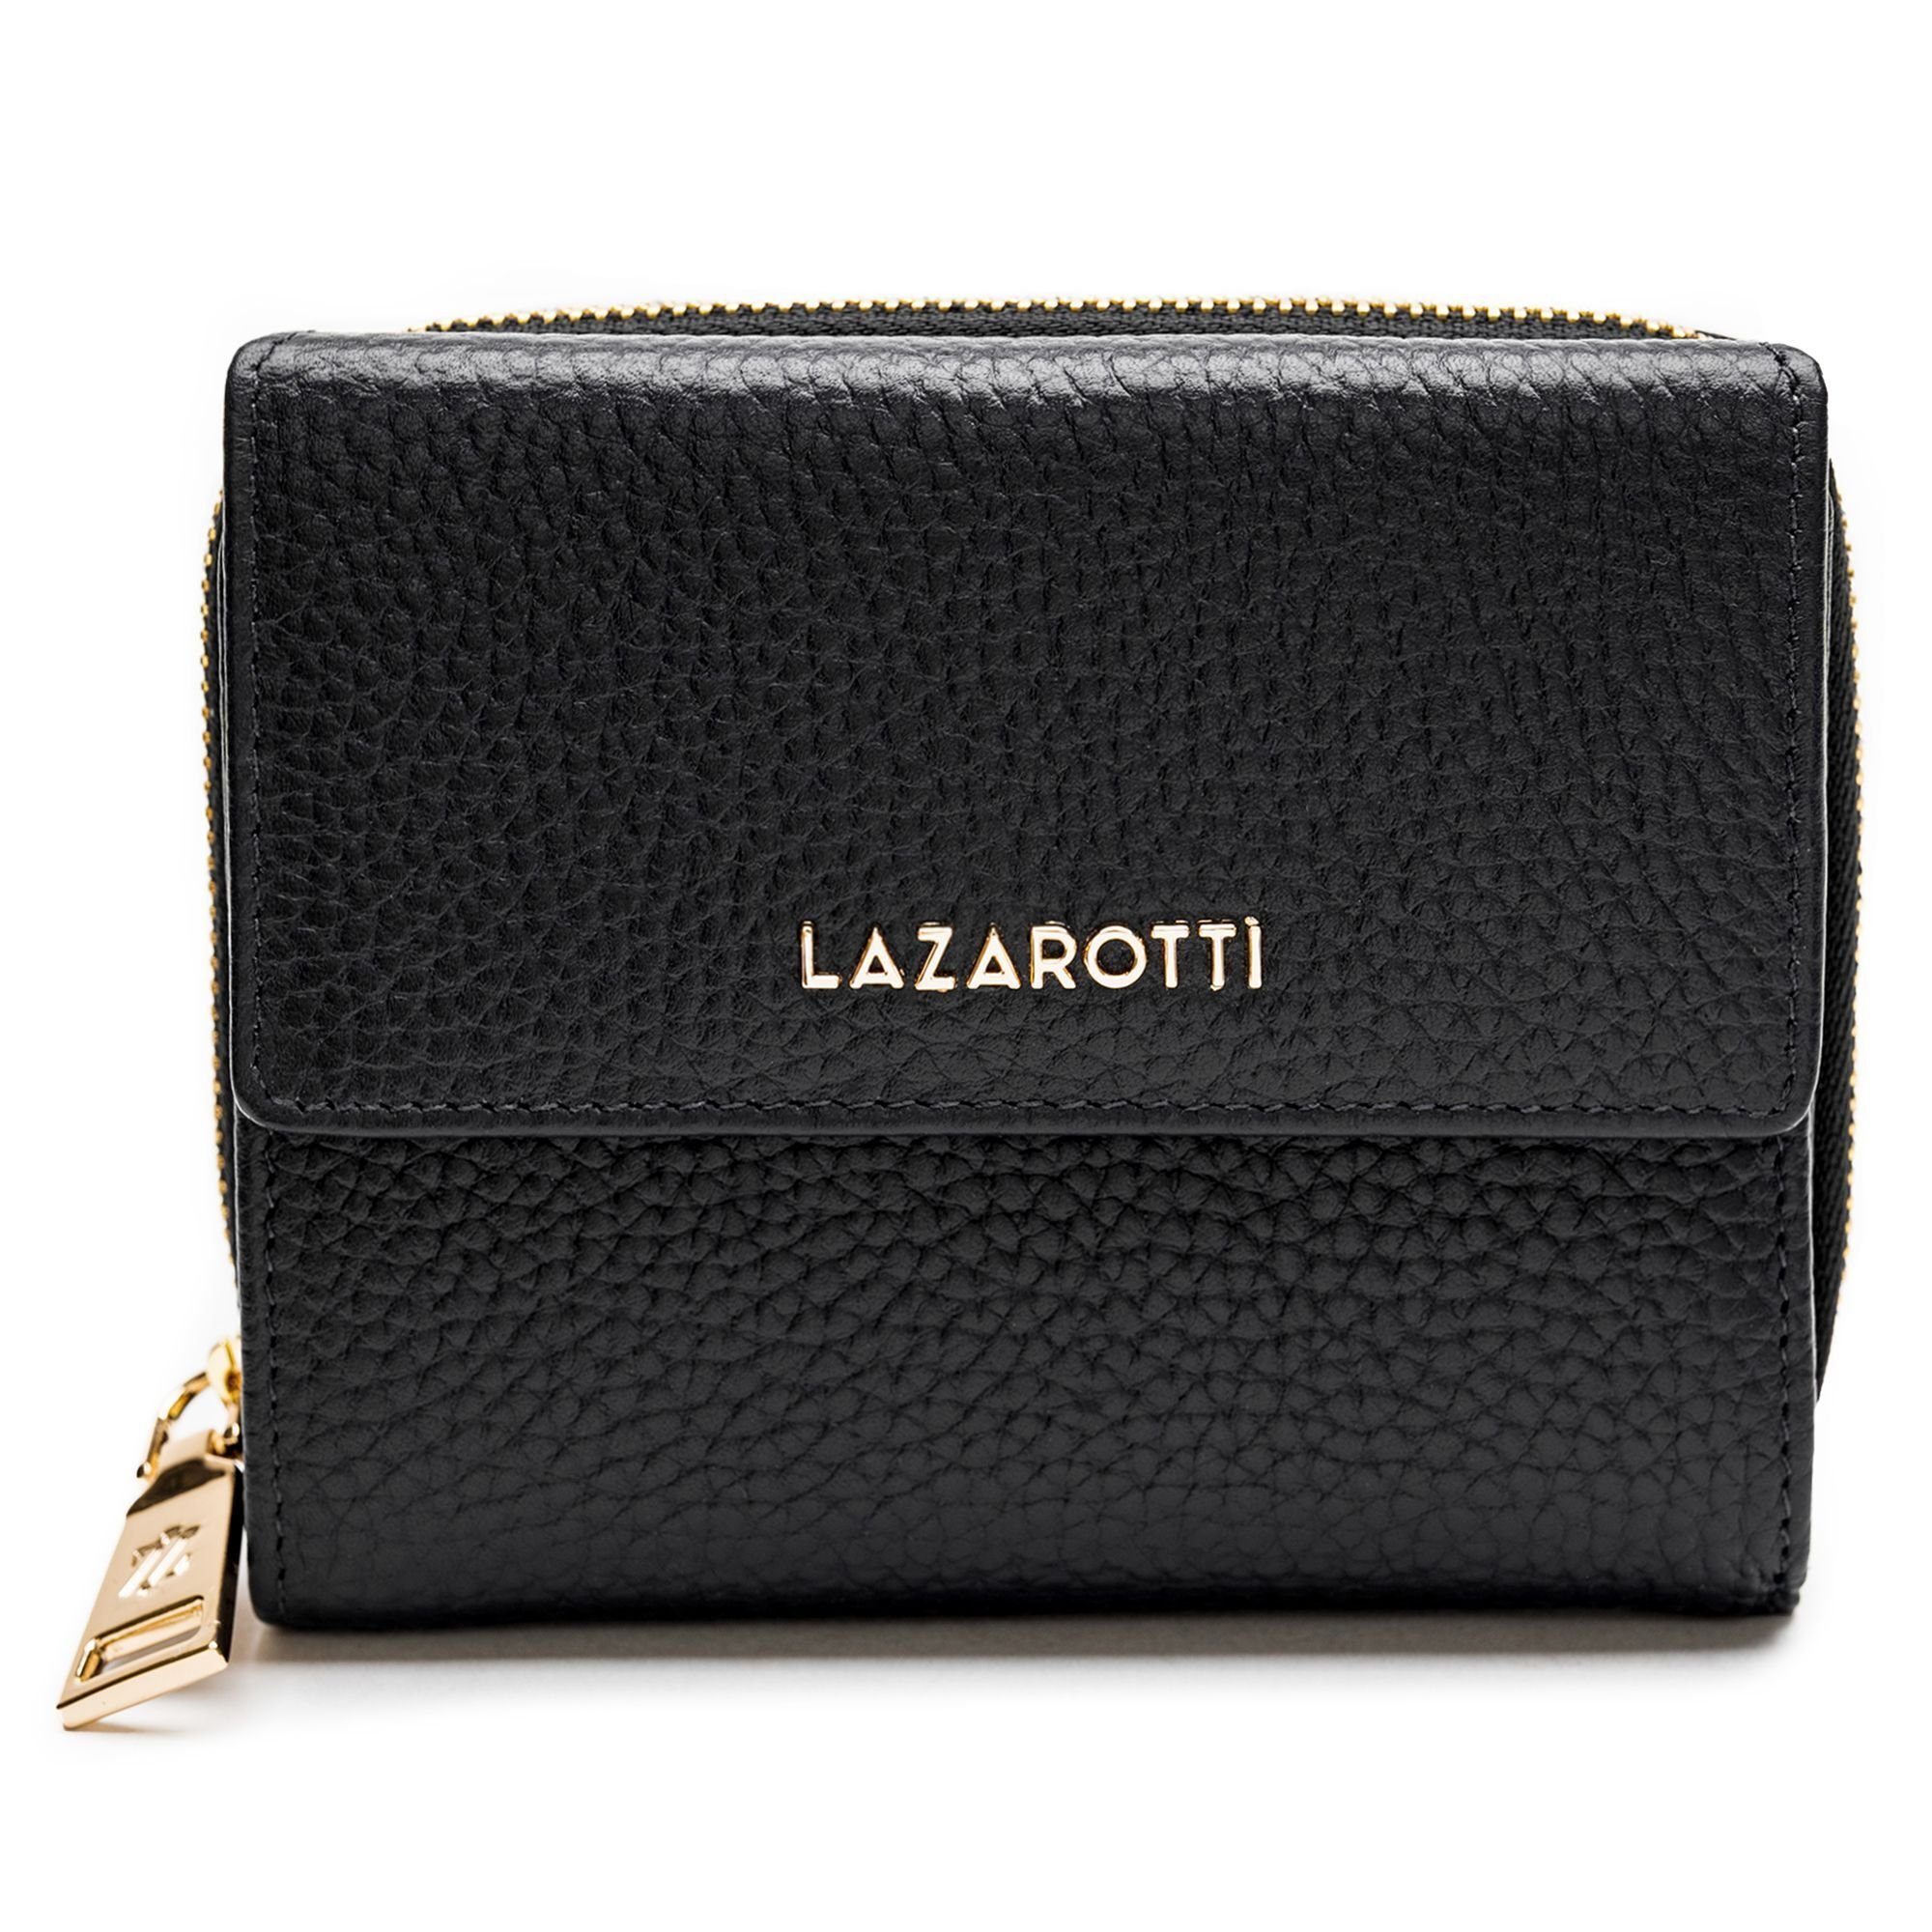 Lazarotti Geldbörse Bologna Leather, Leder black